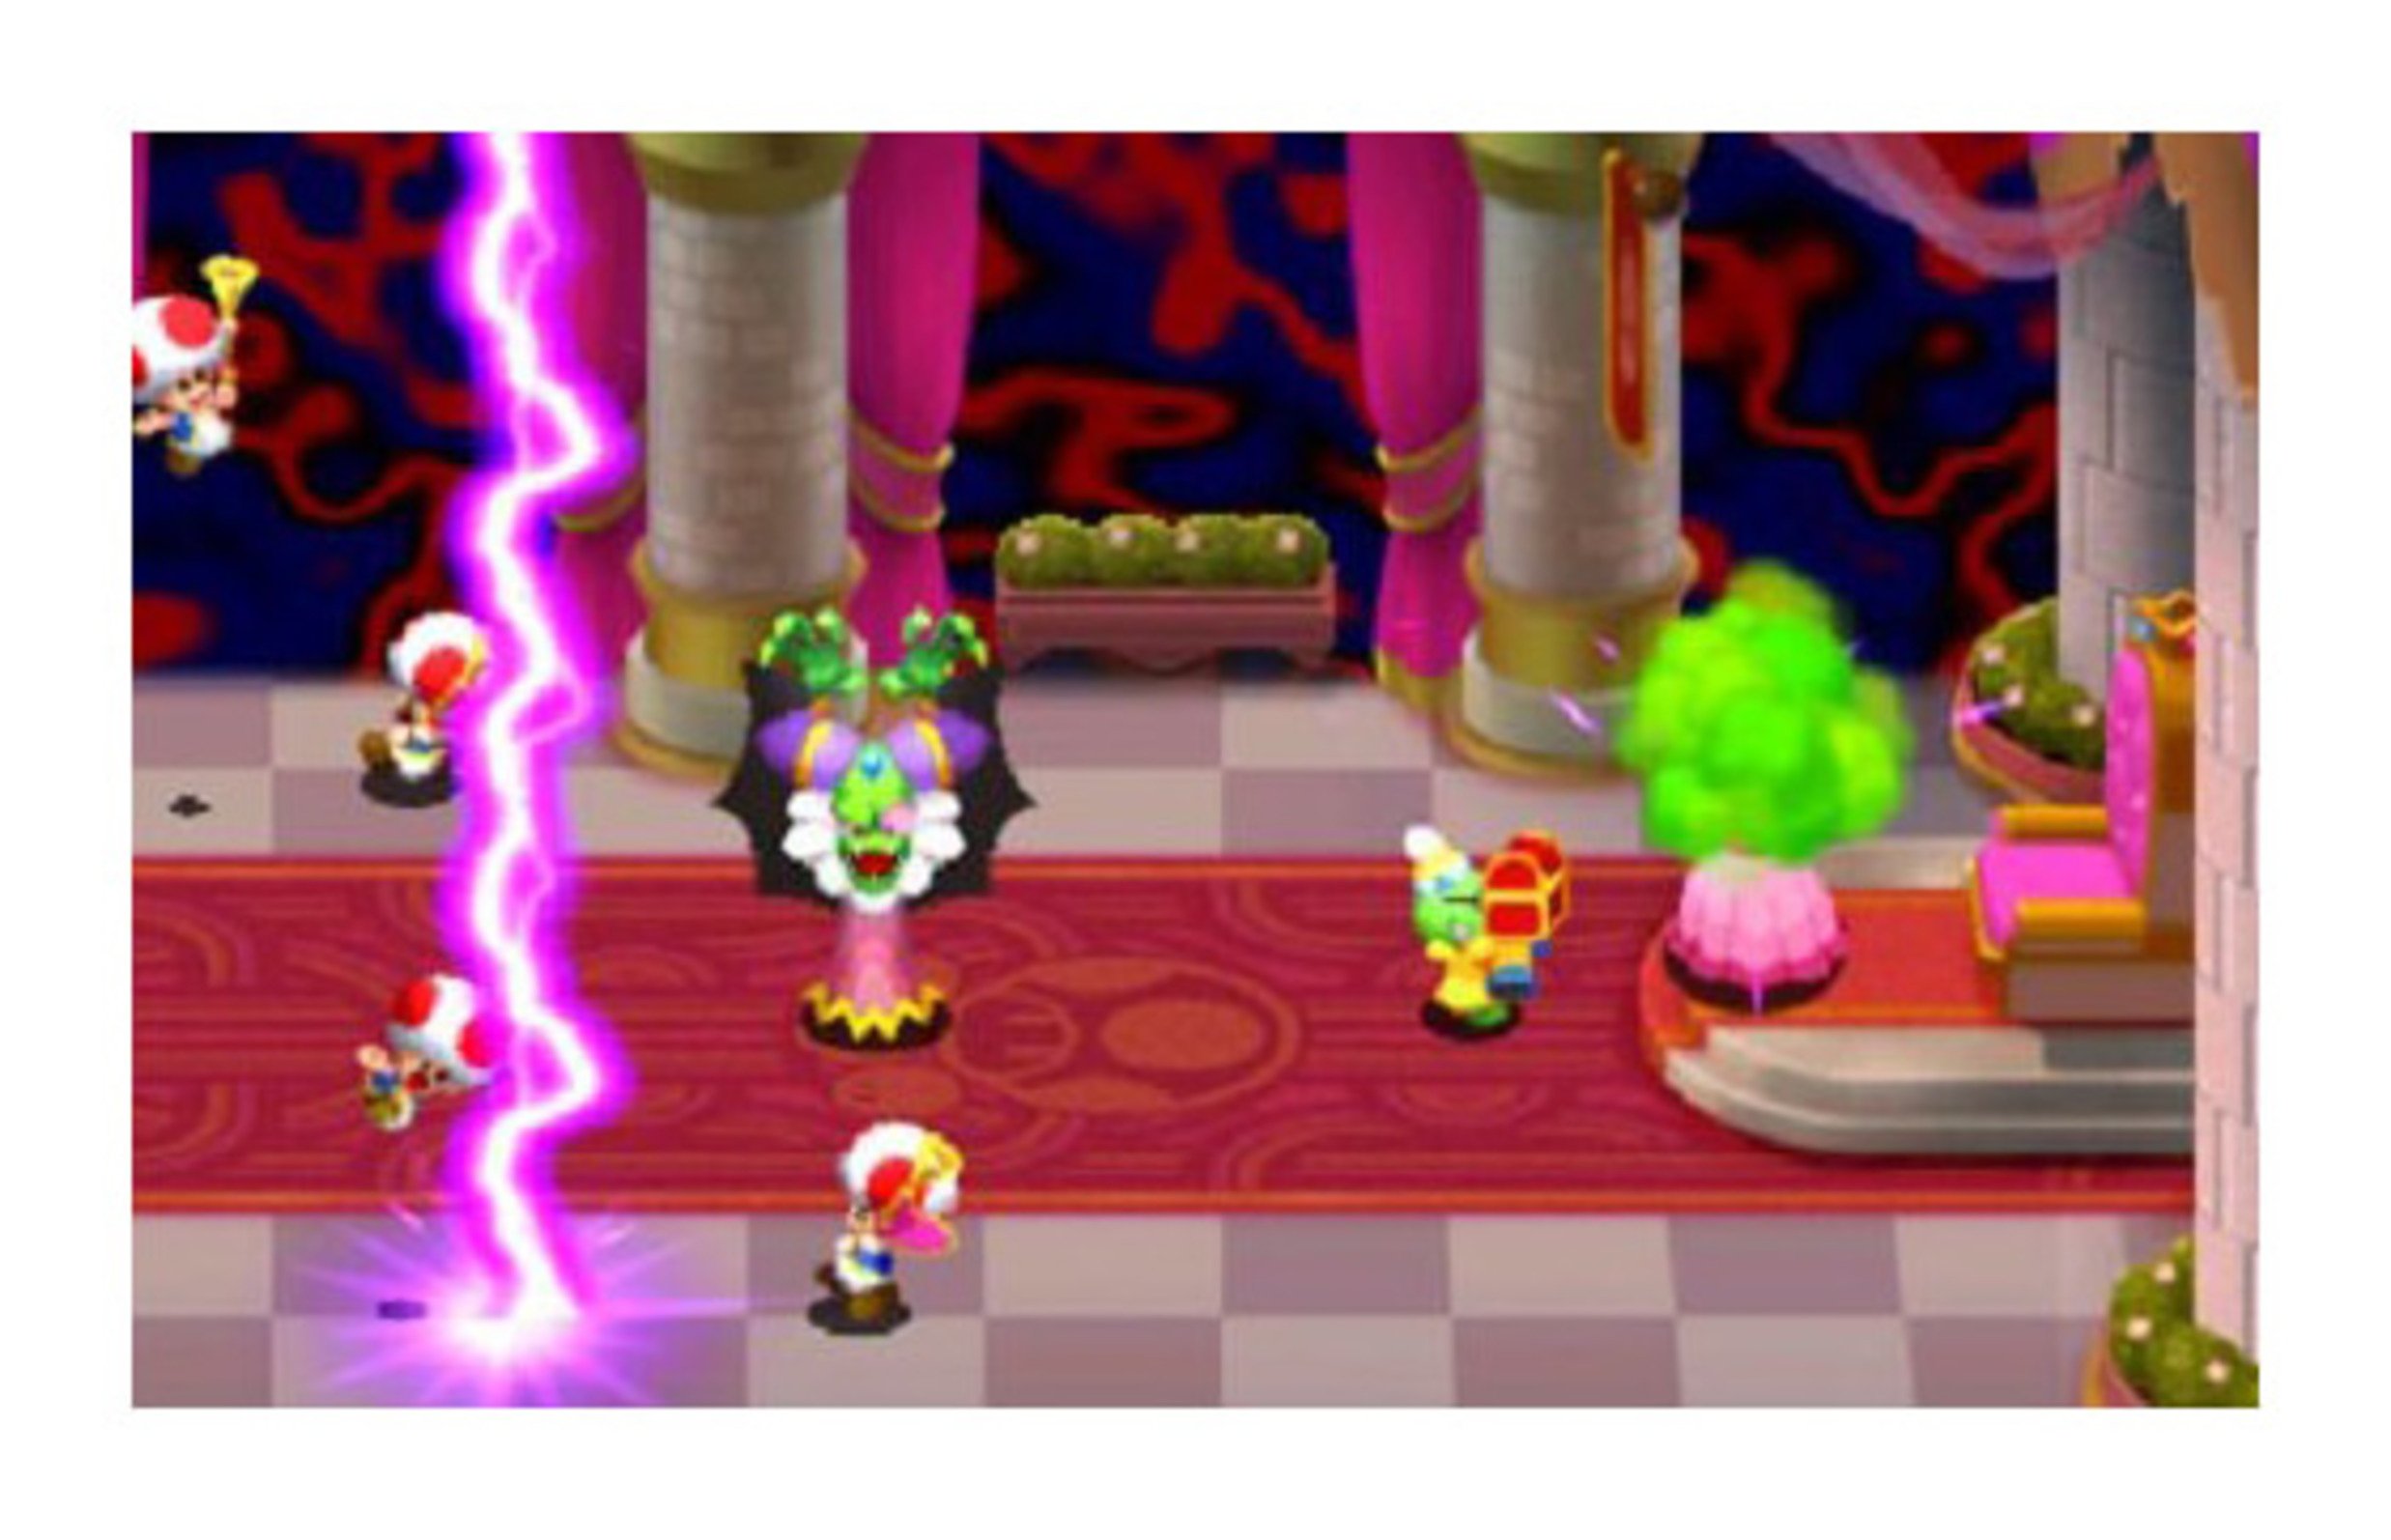 Mario and Luigi: Superstars Nintendo 3DS Game Review